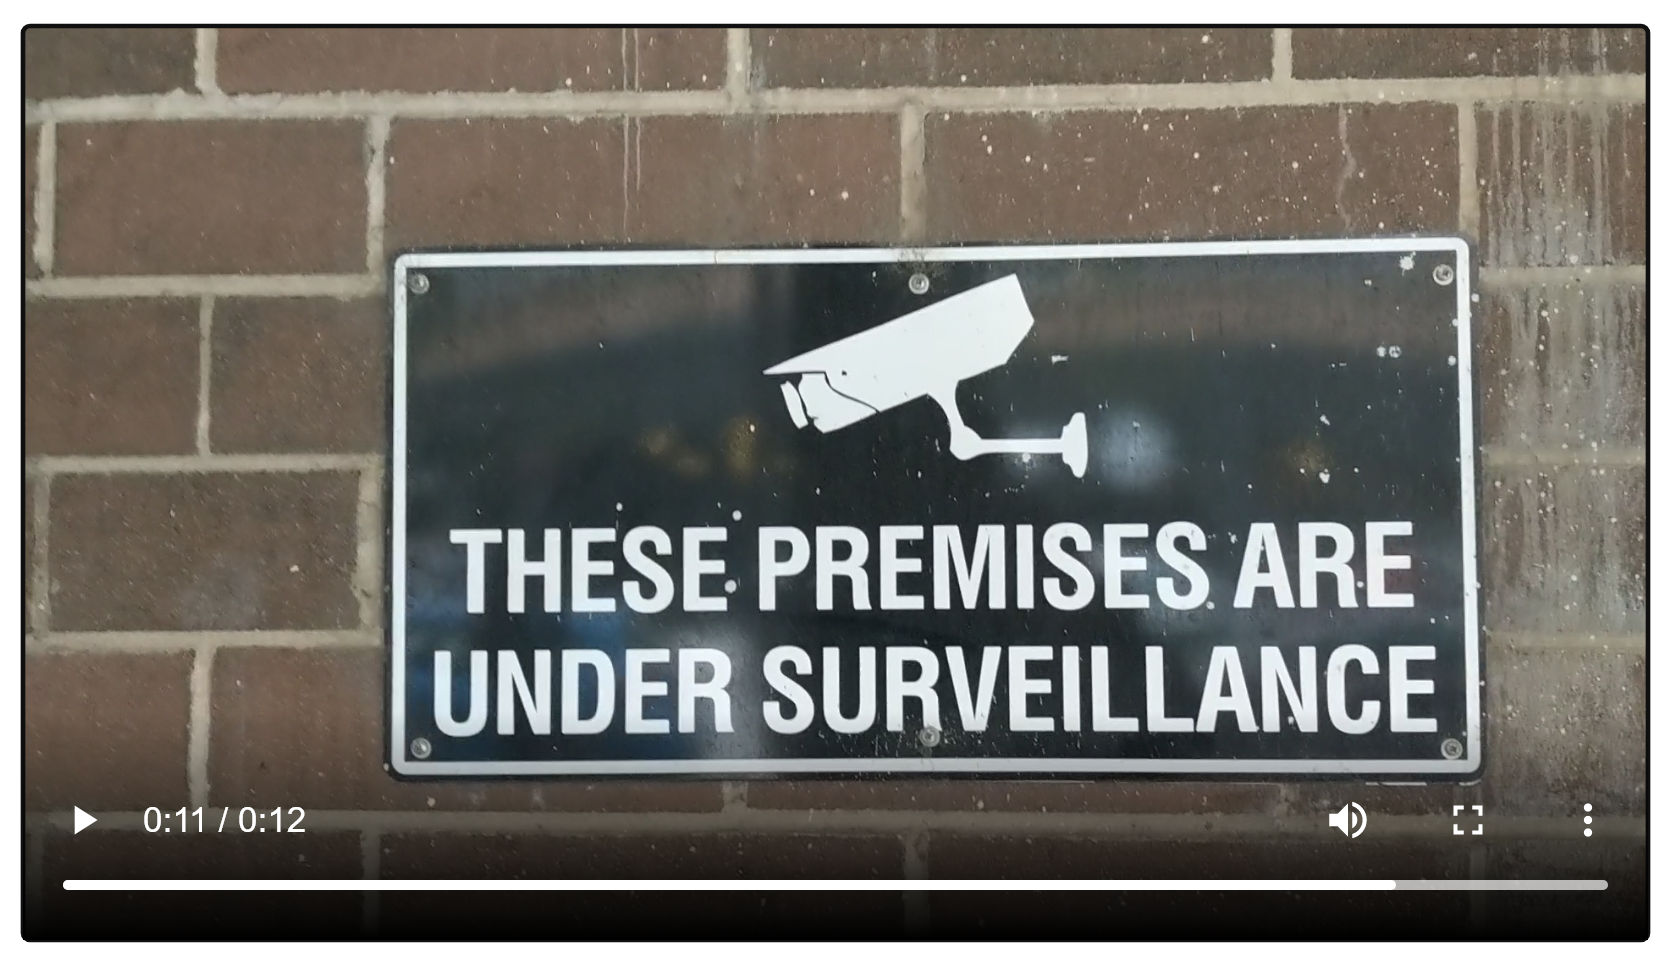 These premises are under surveillance